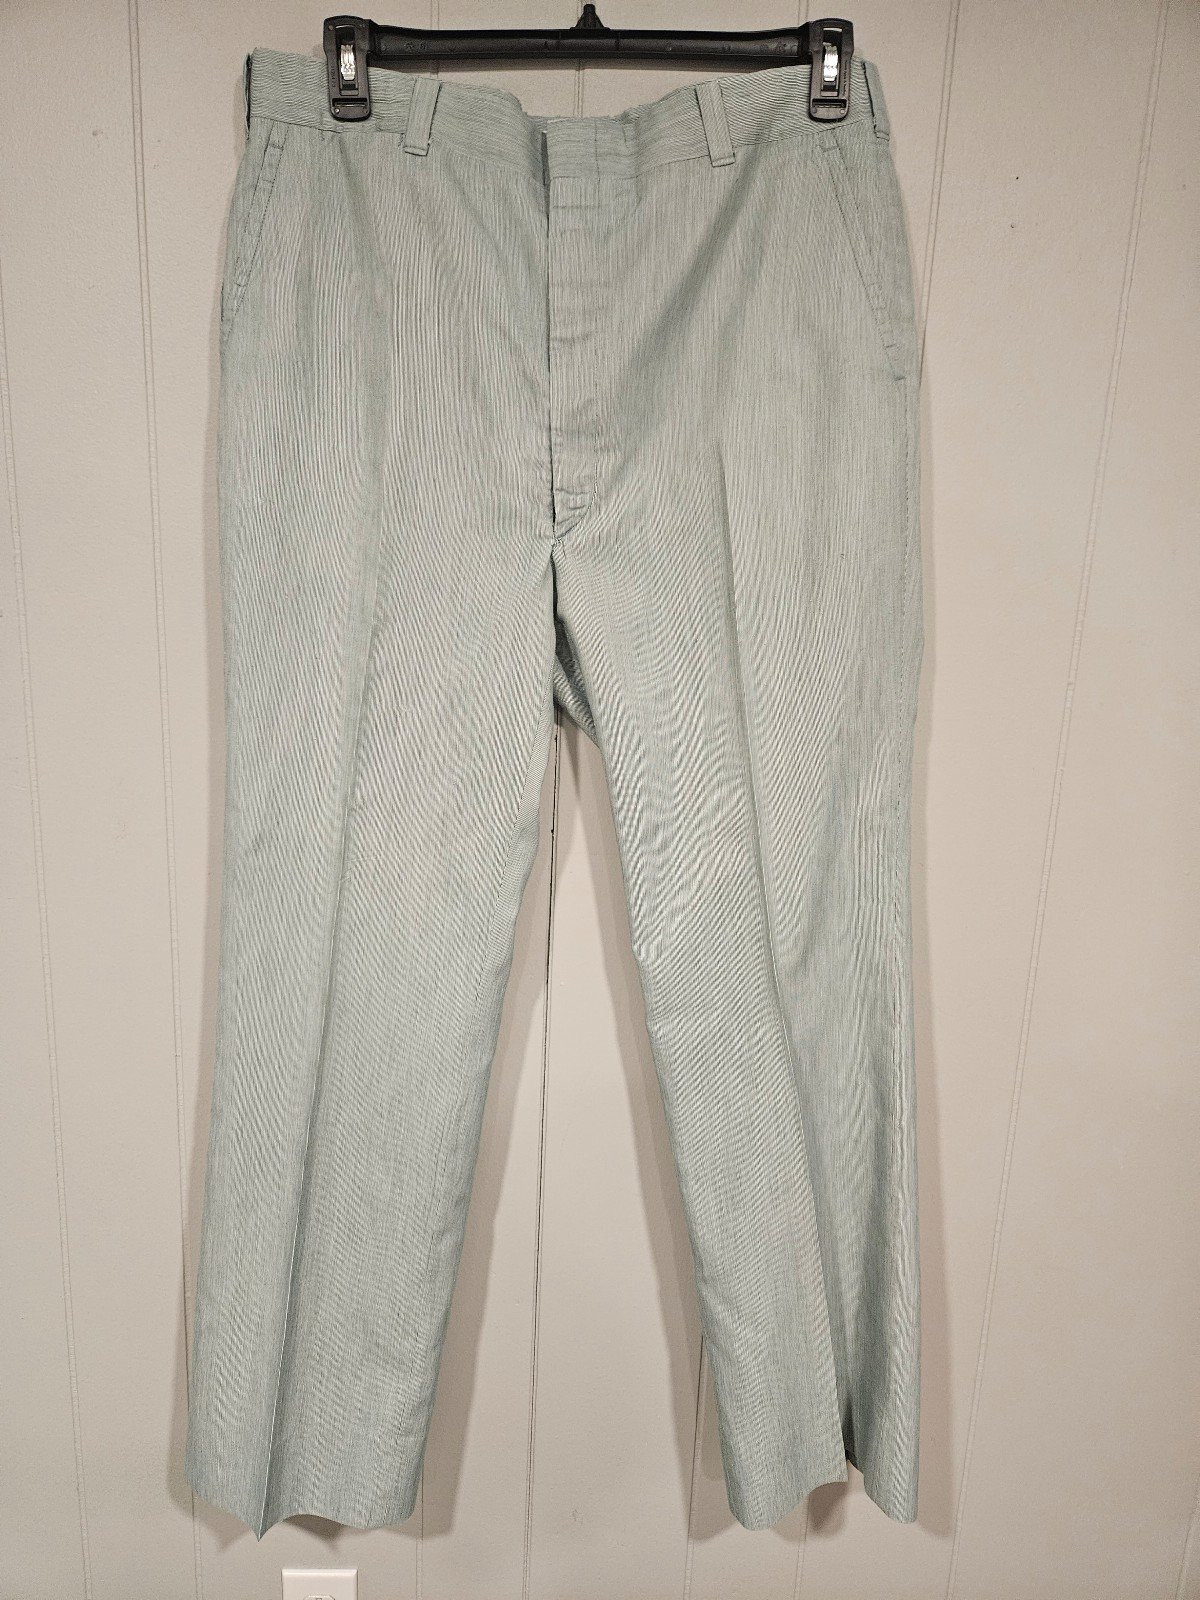 Vintage Hubbard Pin Striped Pants Mens 36x31 Green Slacks Lightweight Easy Fit D0Kg6qhgv